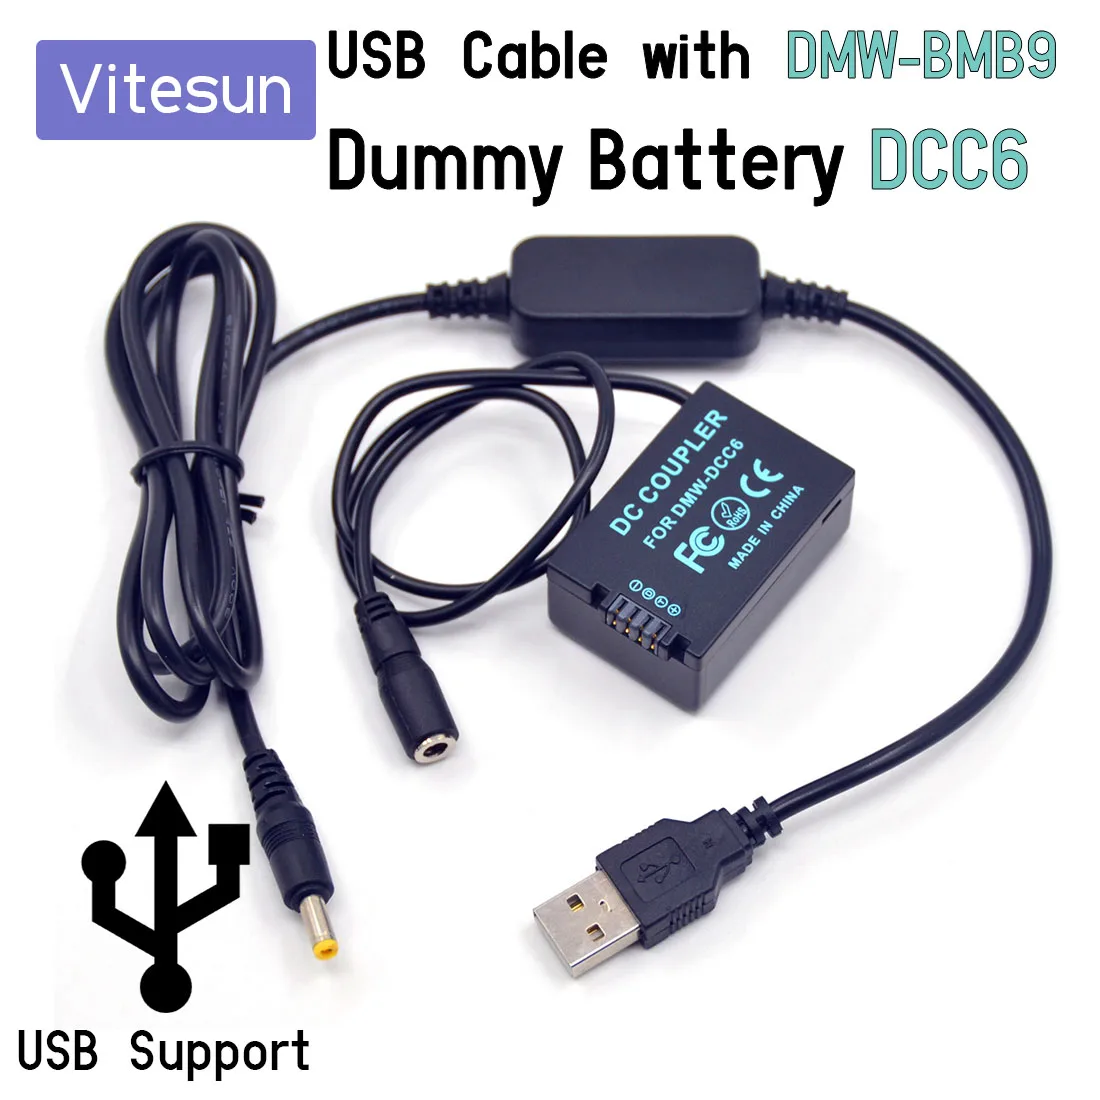 Power Bank 5V USB Adapter Cable + DMW-BMB9 Dummy Battery DMW-DCC6 for Panasonic Lumix DMC-FZ45 FZ47 FZ48 FZ60 FZ70 FZ72 FZ100